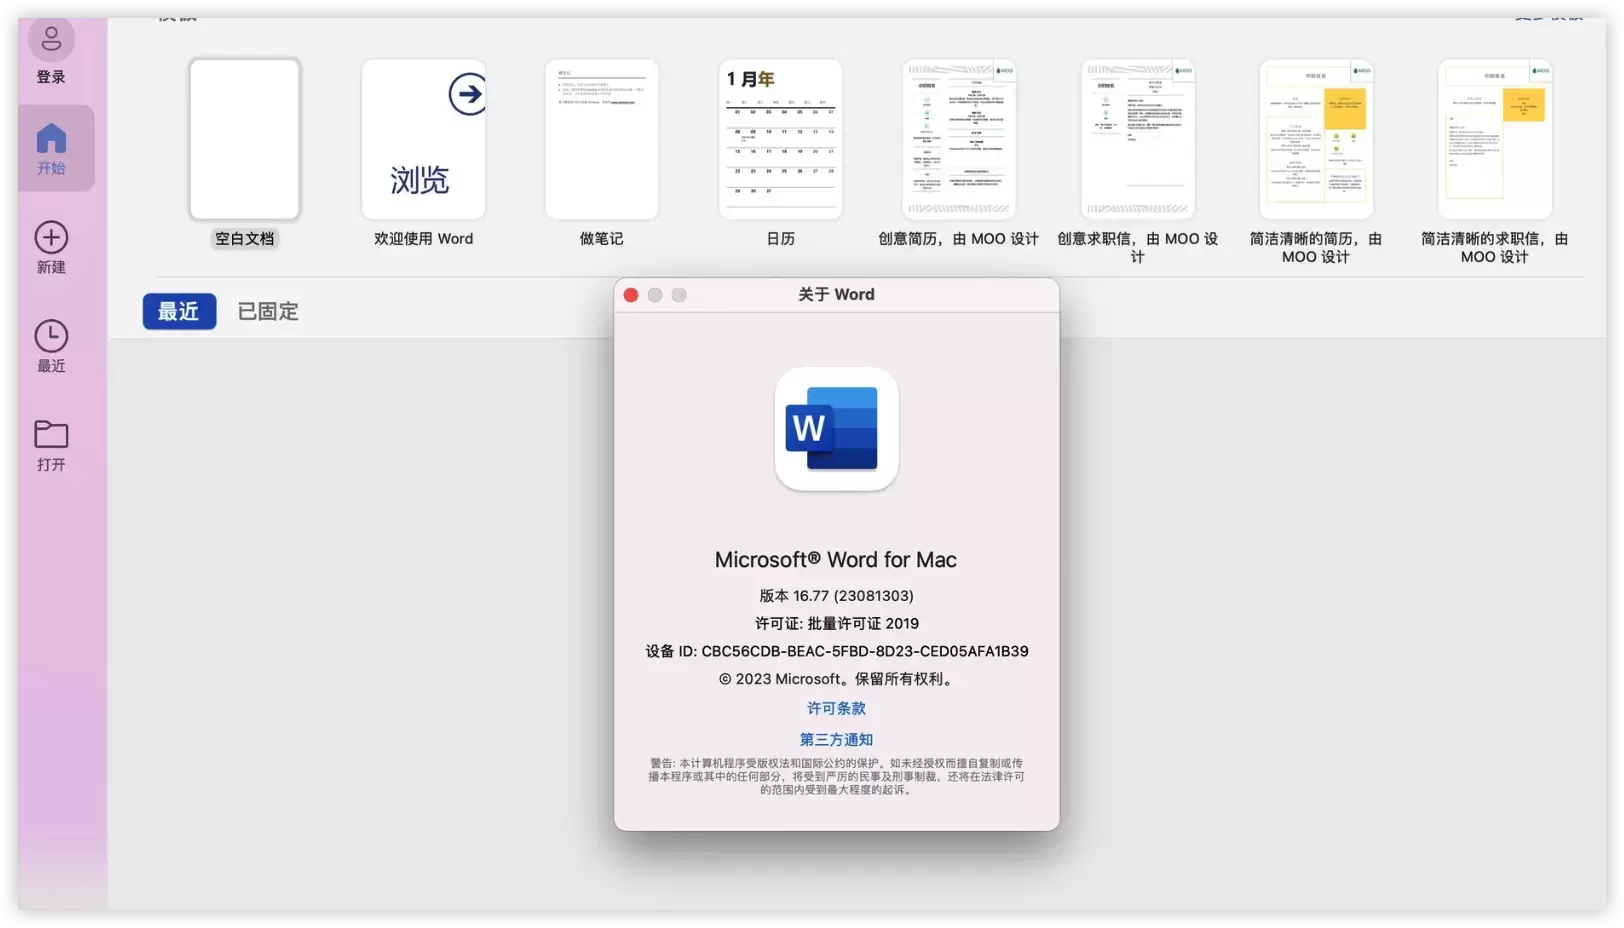 [MAC]Microsoft word 2019  for Mac  (办公文档处理软件) v16.77 beta中文激活版下载插图1